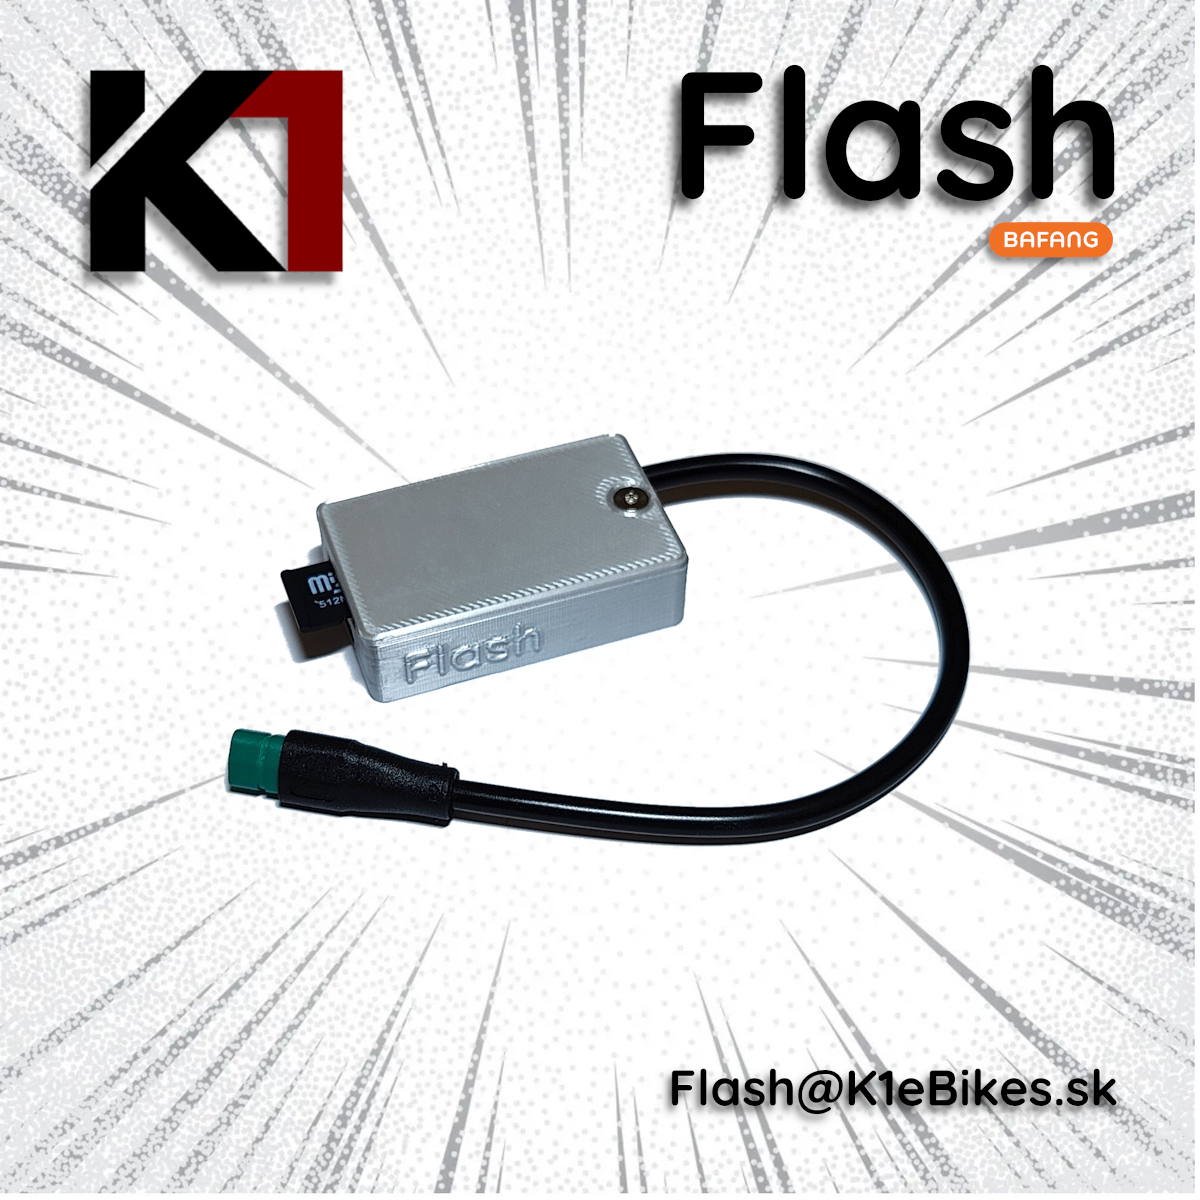 K1 Flash Cover.jpg